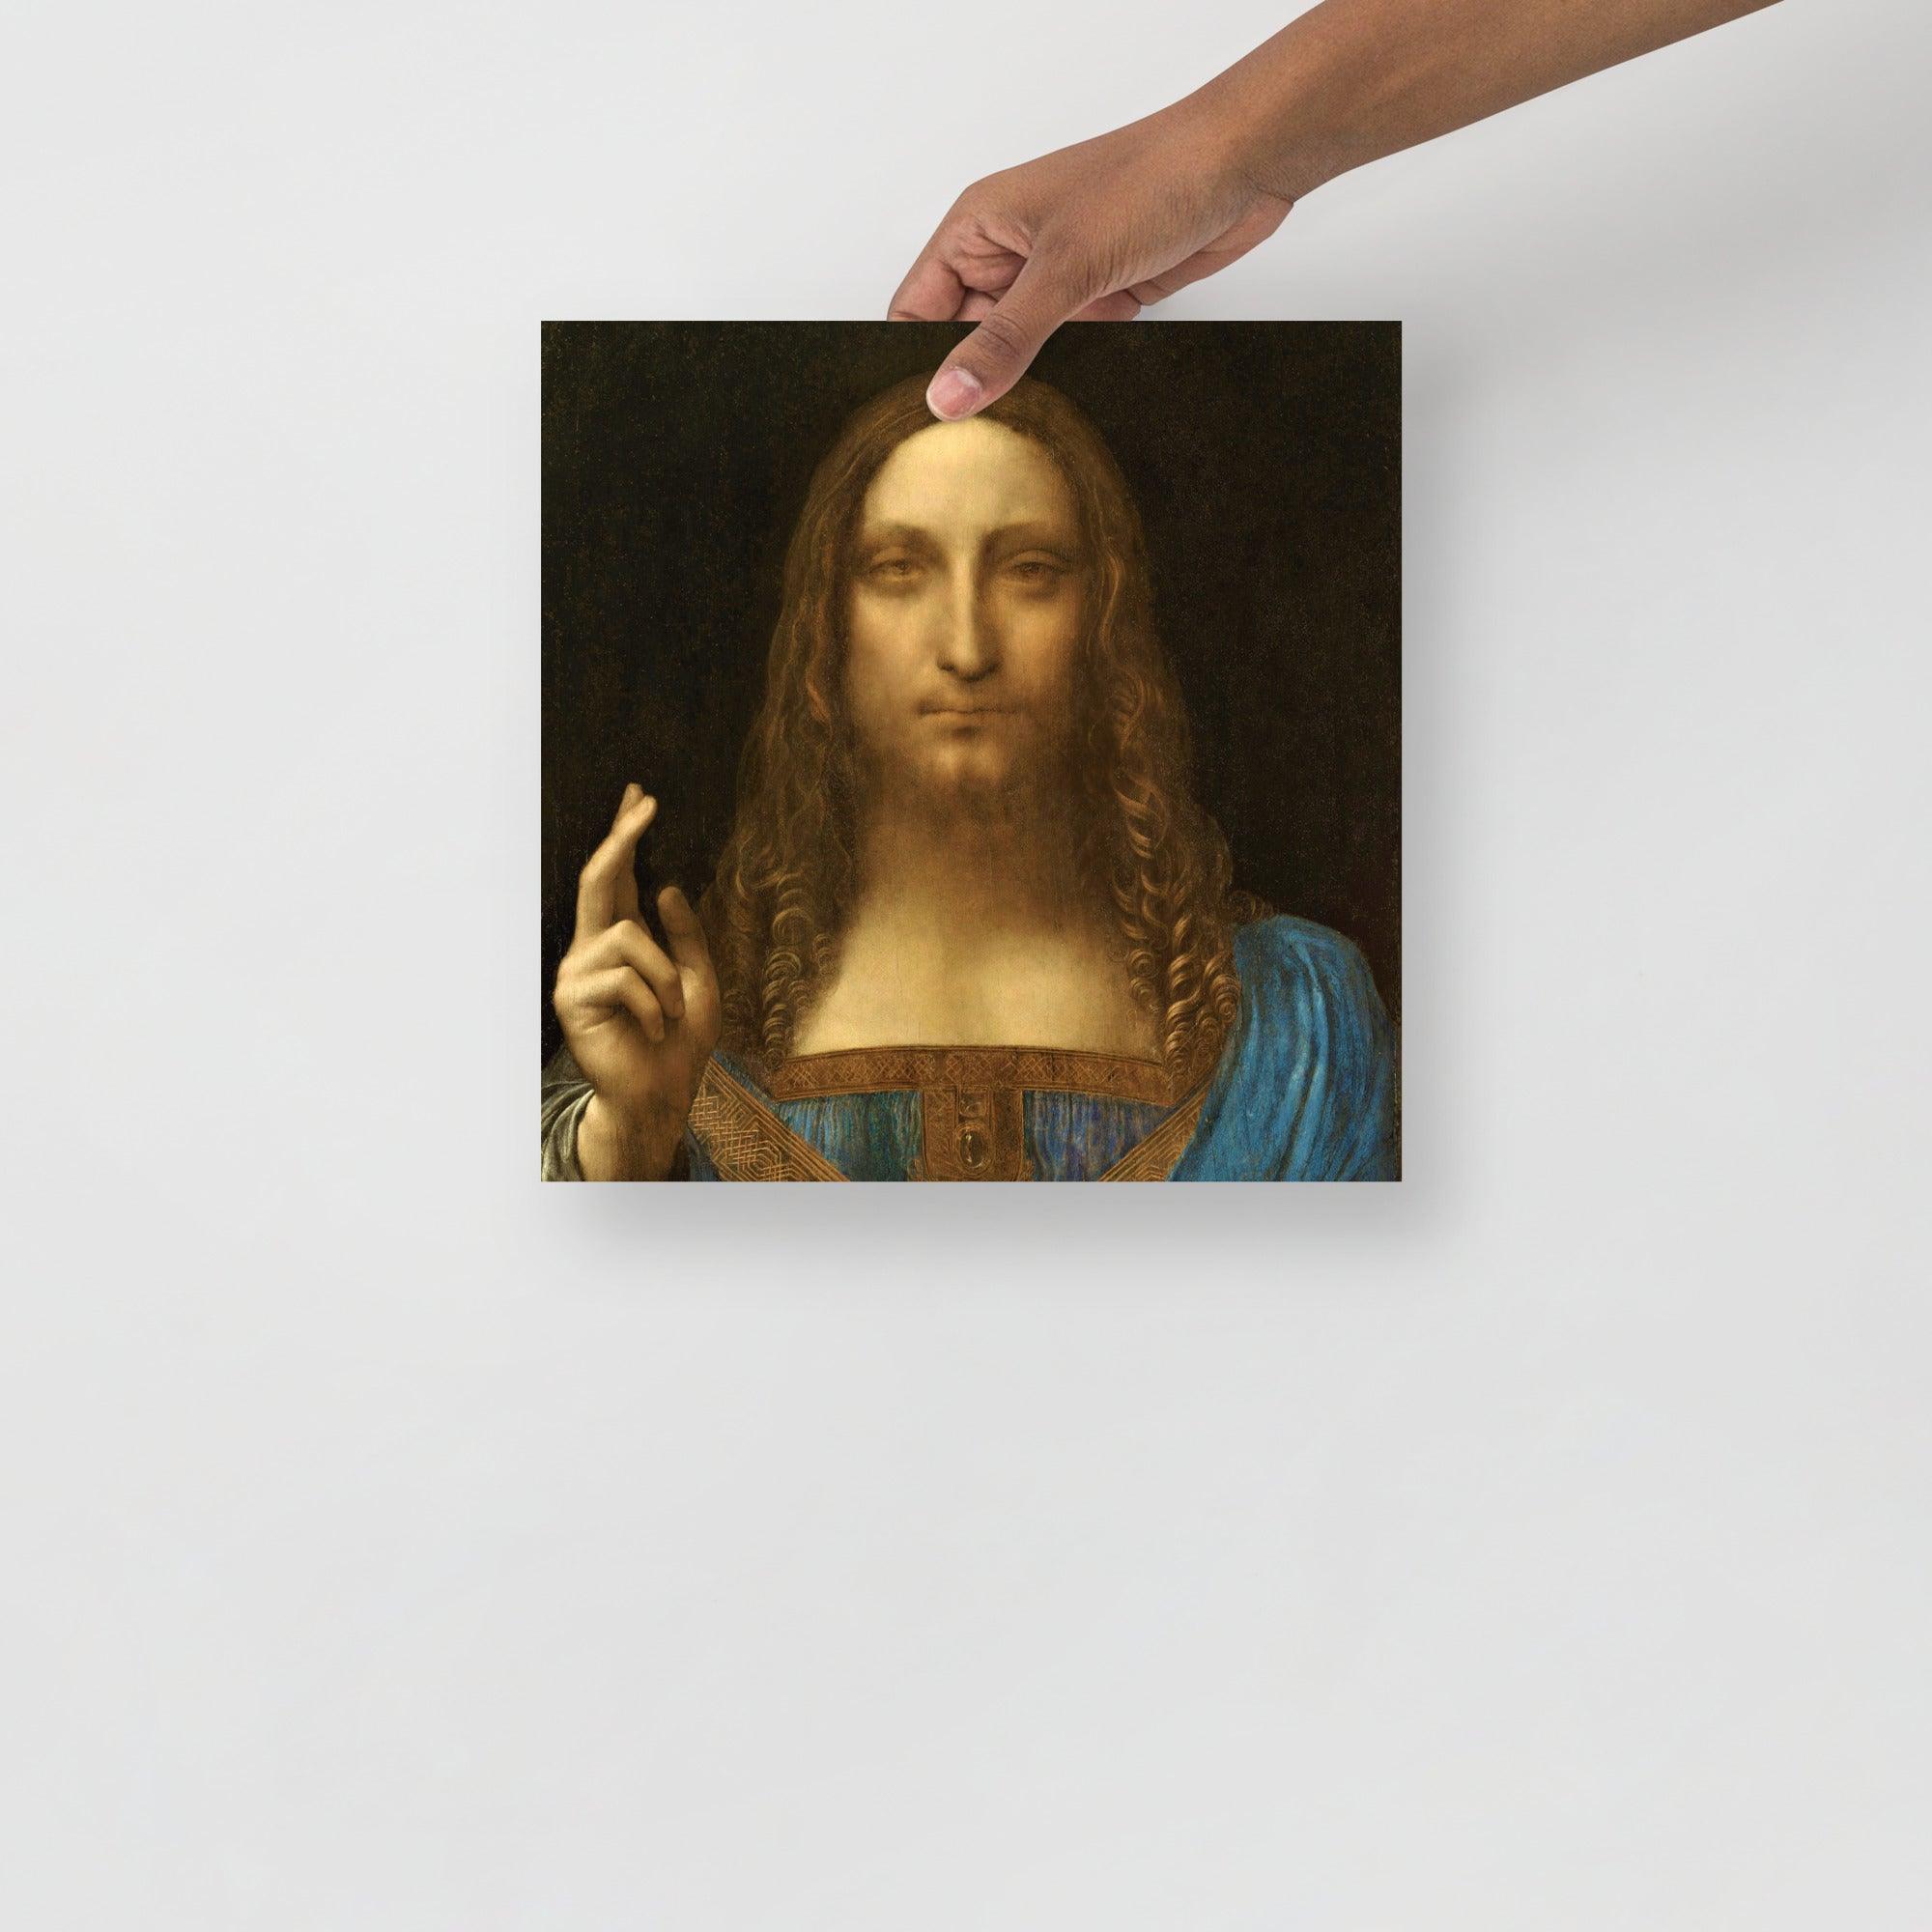 A Salvator Mundi by Leonardo Da Vinci poster on a plain backdrop in size 12x12”.